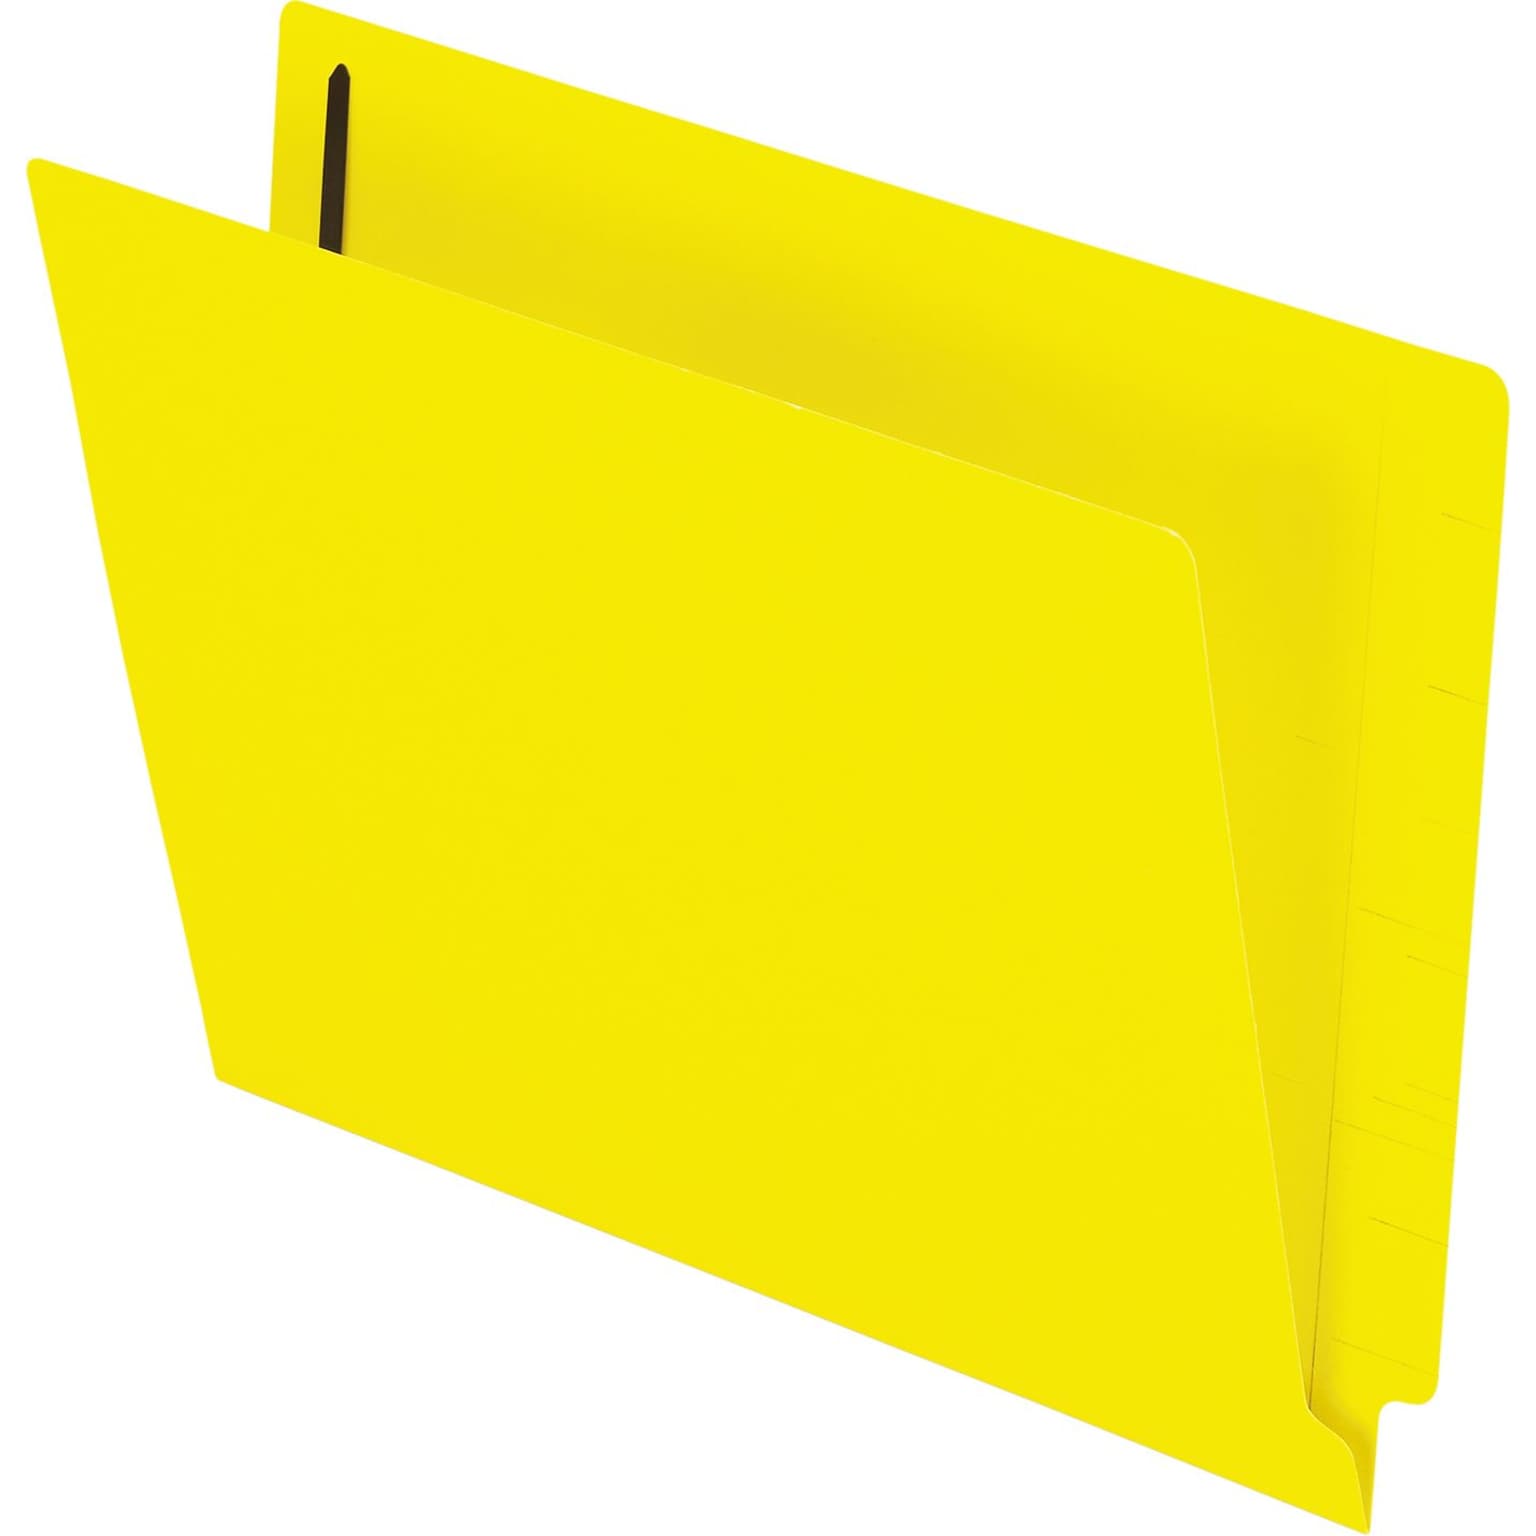 Pendaflex Colored Reinforced Heavy Duty End Tab Fasteners Folders, Letter Size, Yellow, 50/Box (H10U13Y)